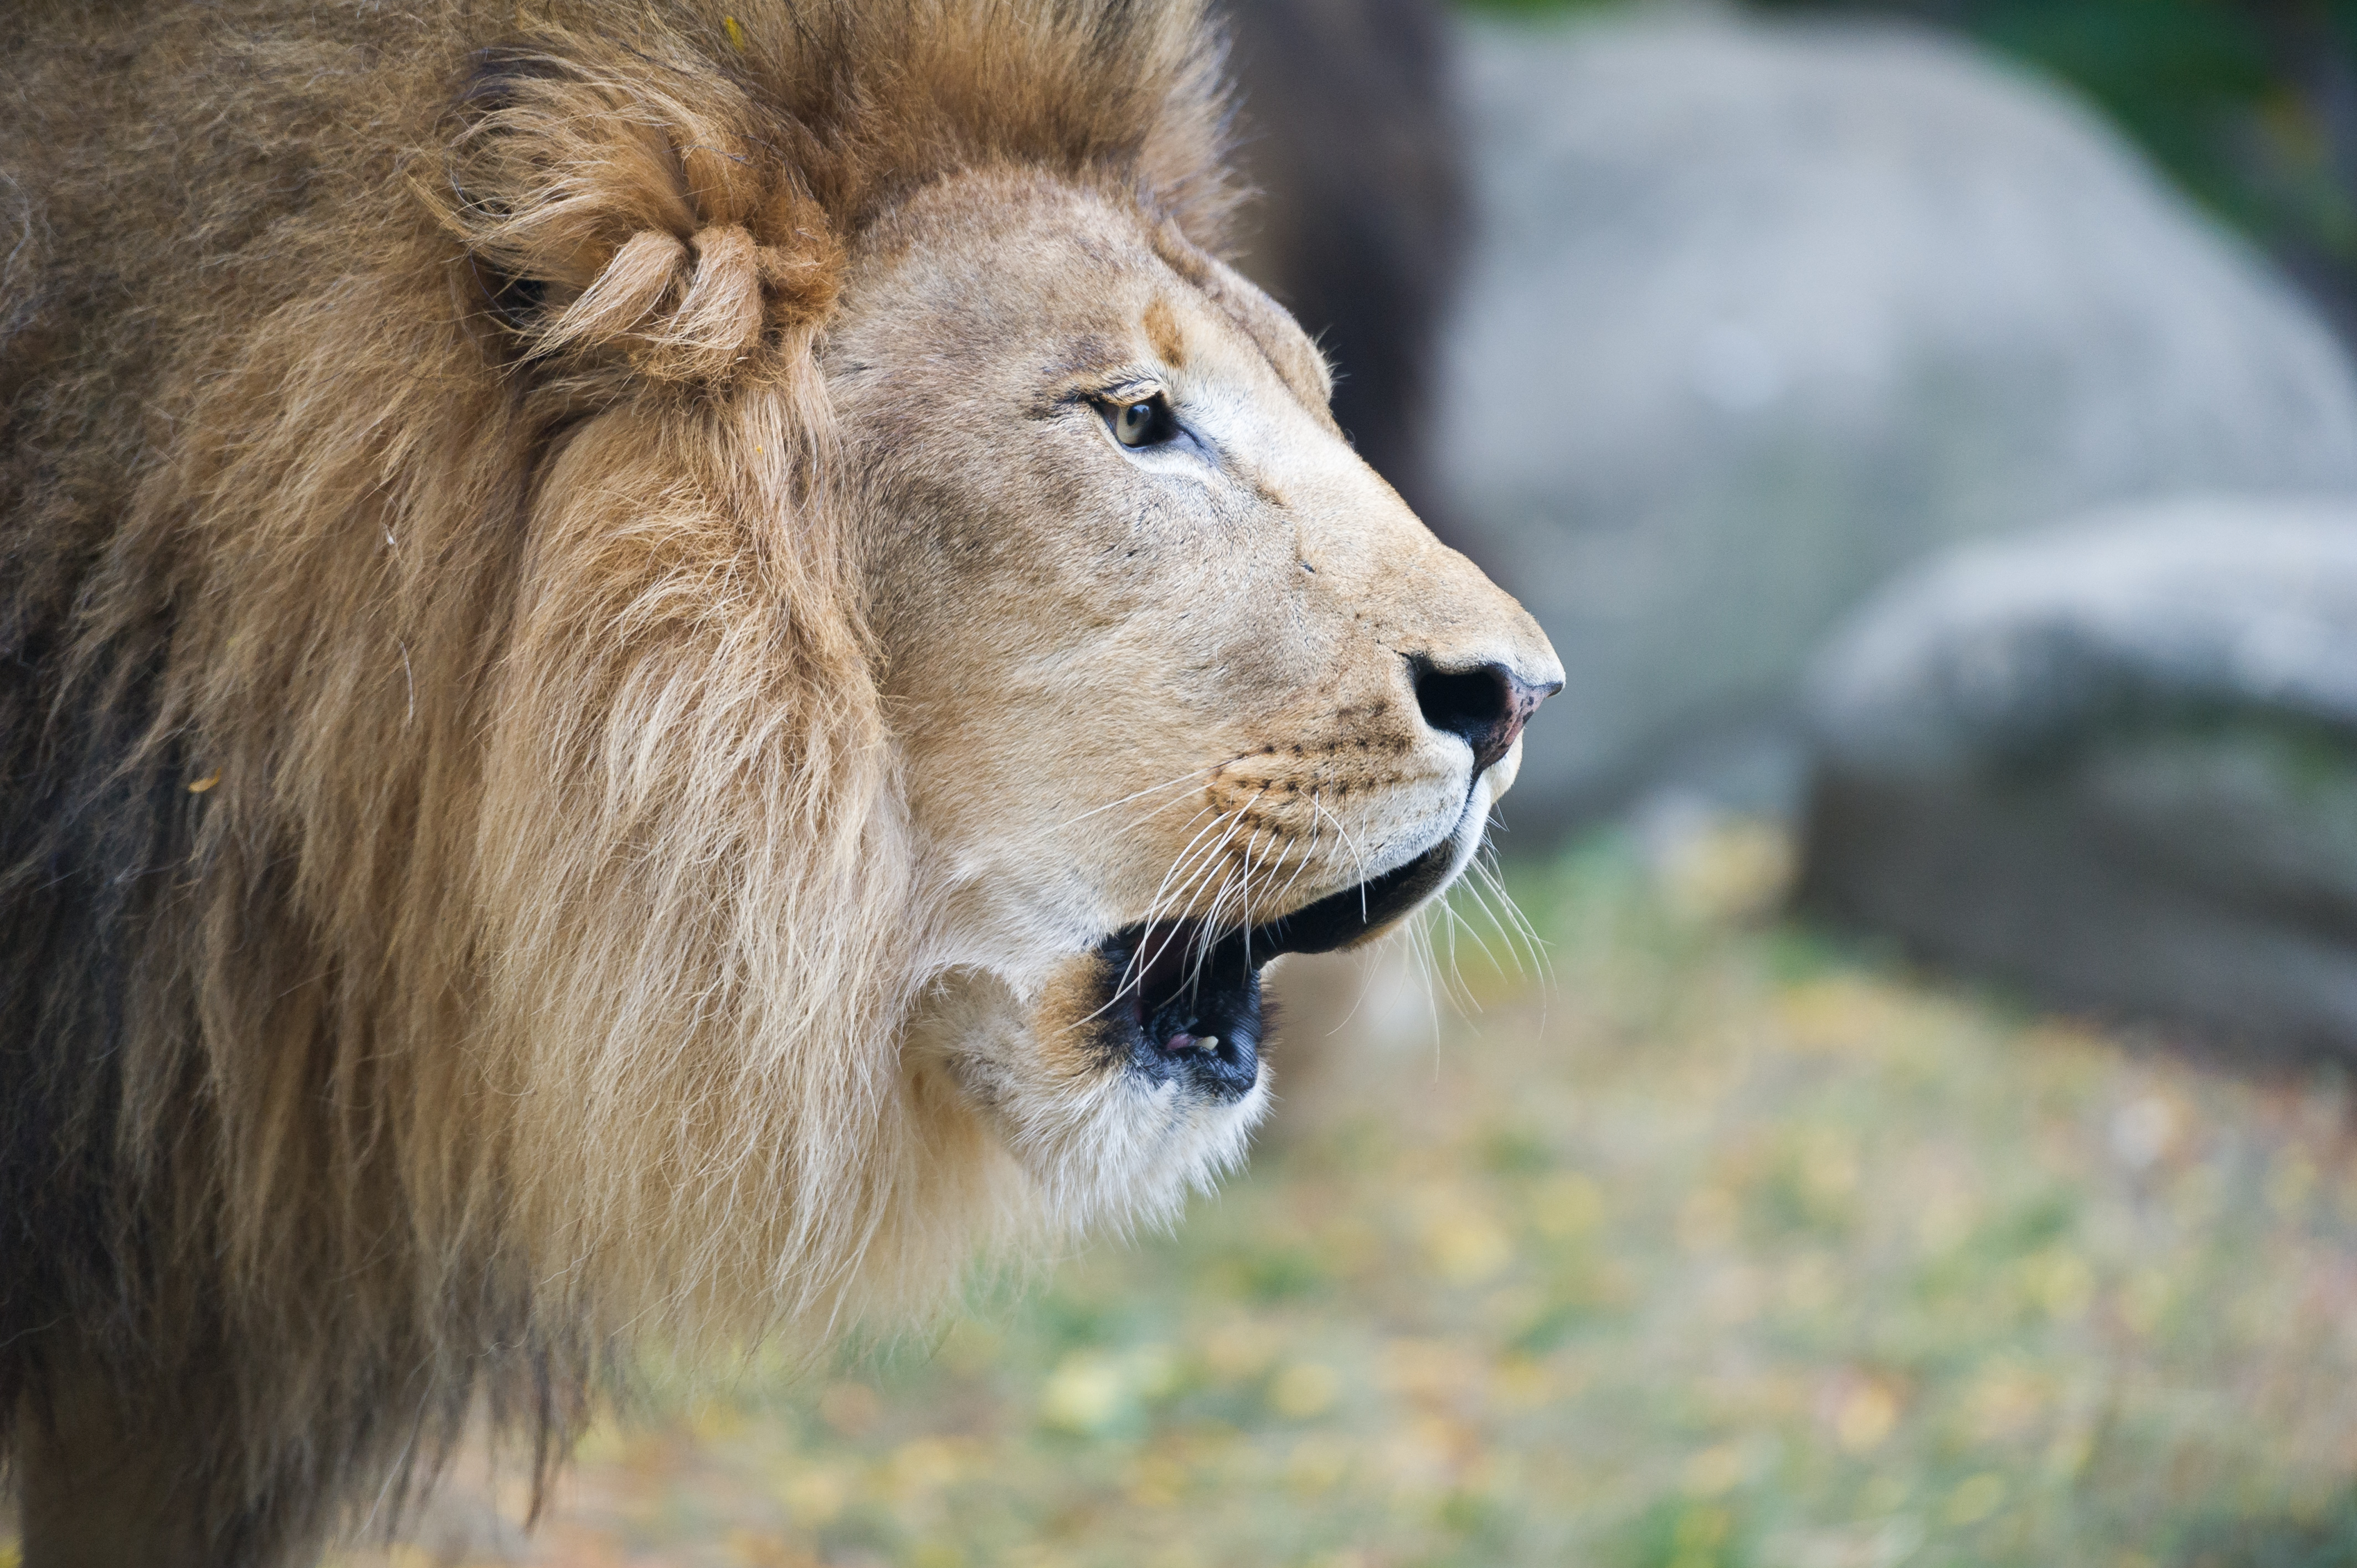 Lion Roaring - Closeup Profile (21277381388)